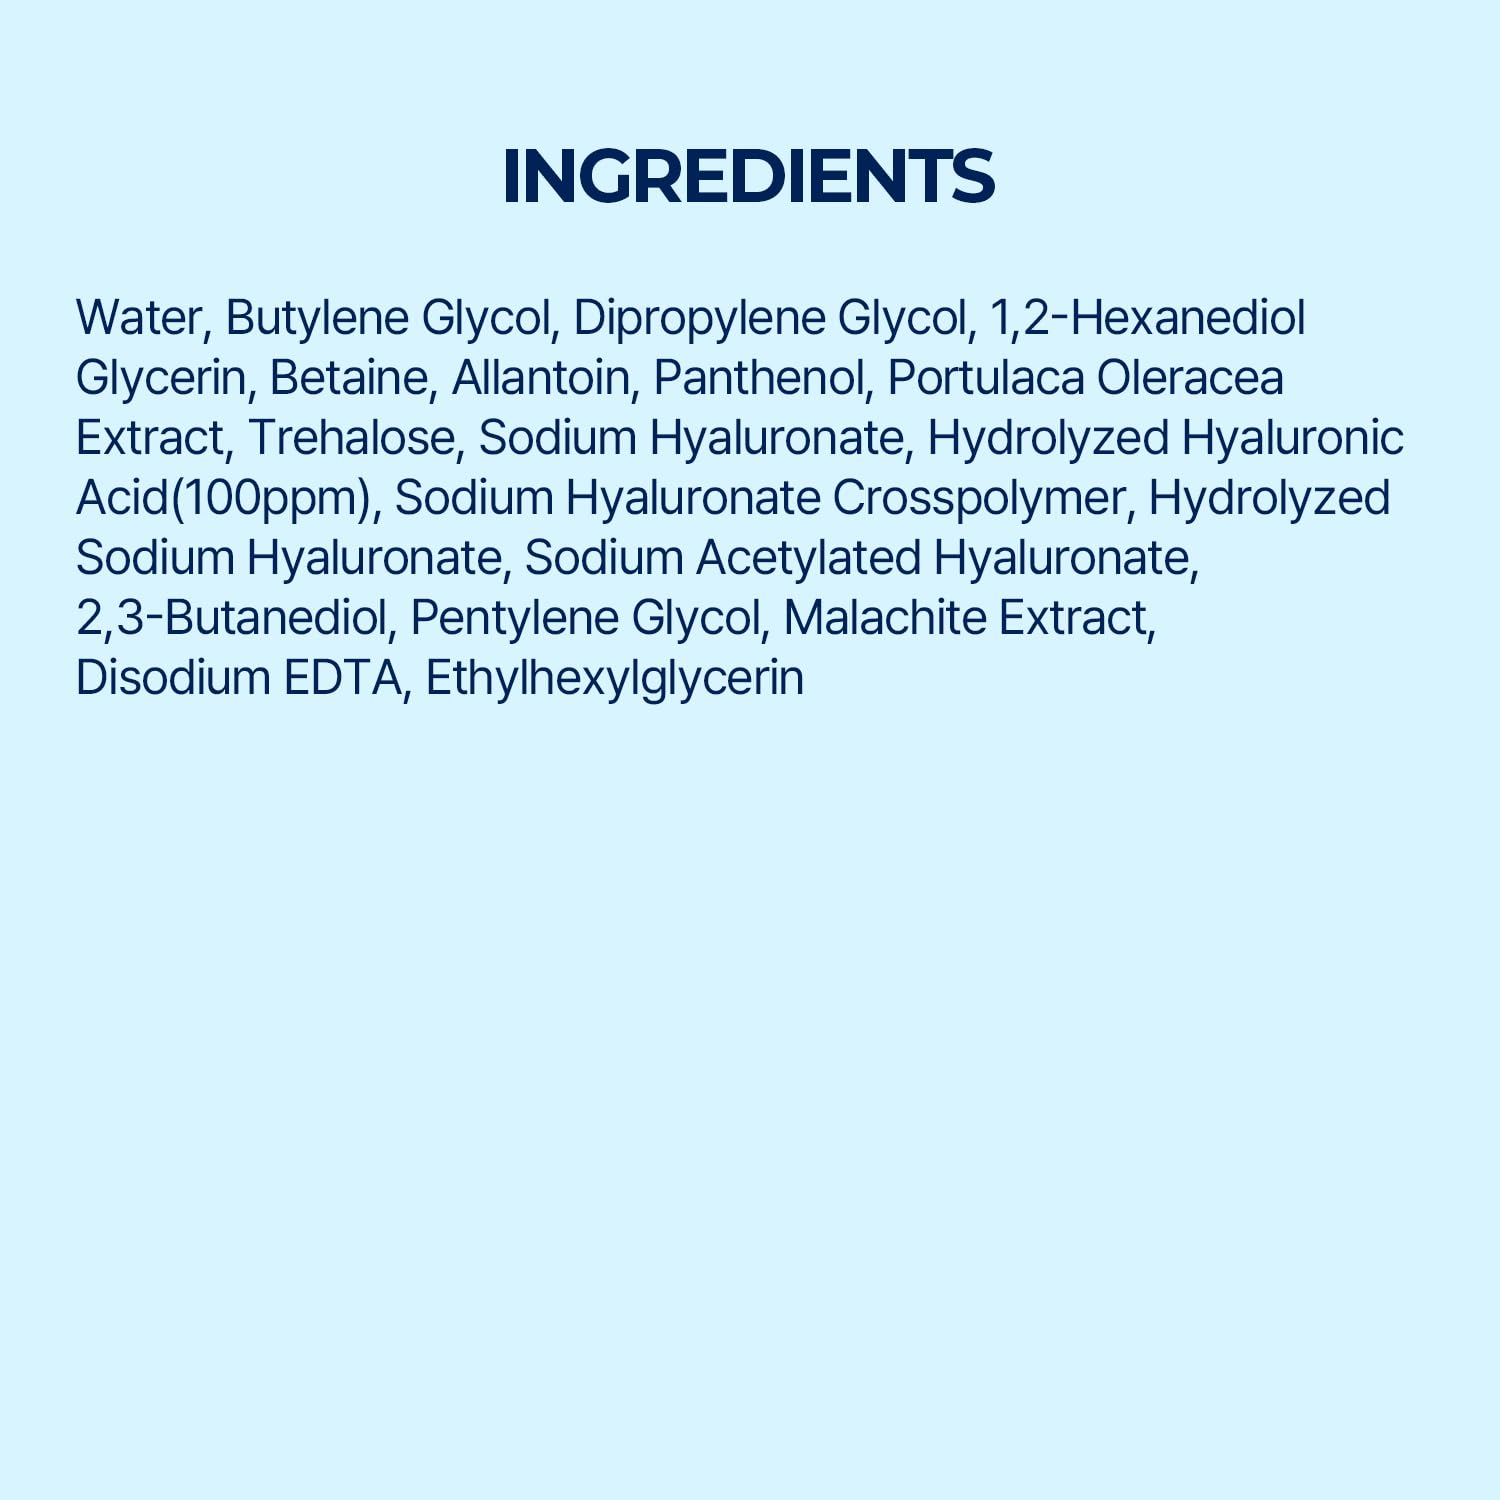 Torriden - DIVE-IN Low Molecule Hyaluronic Acid Toner 300ml - Kiokii and... | Kiokii and...